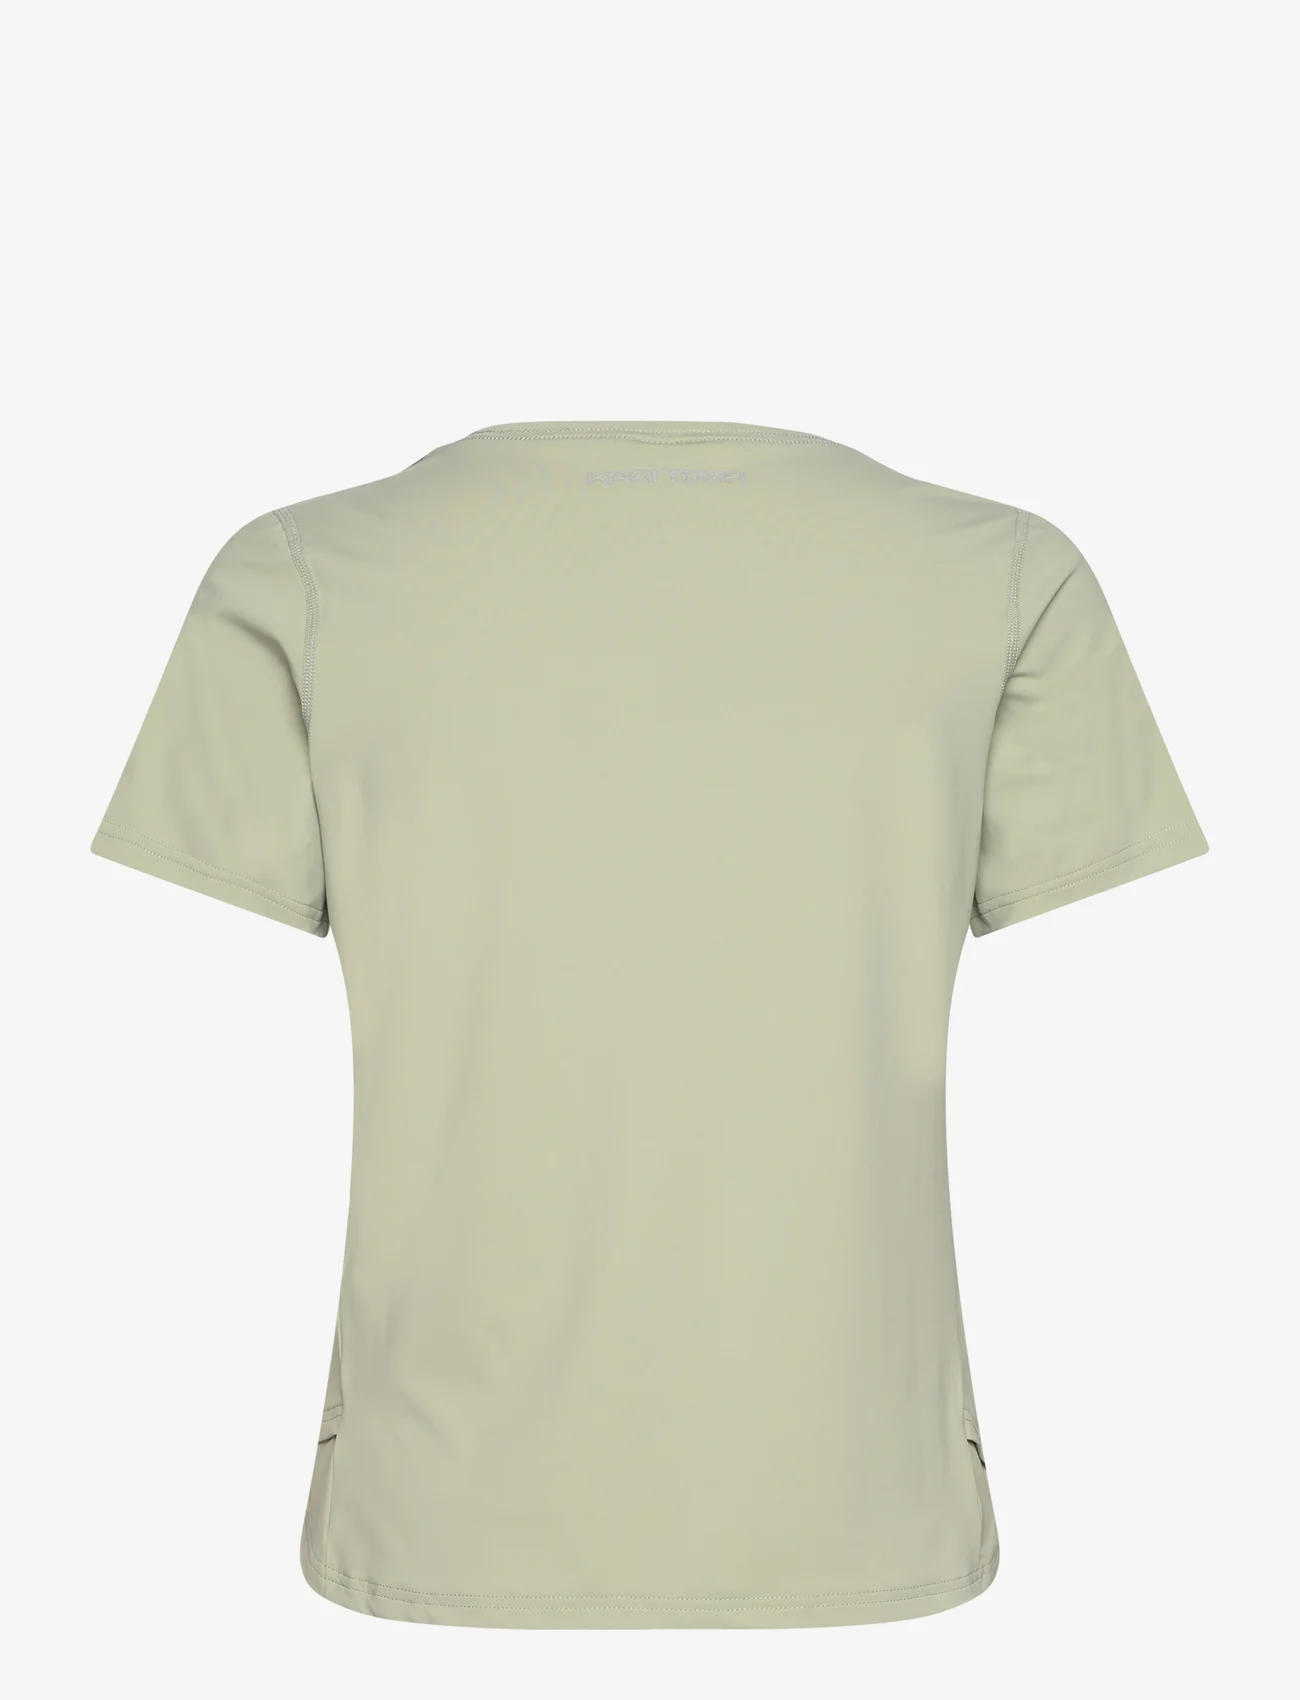 Kari Traa - VILDE TEE - t-shirts - slate - 1